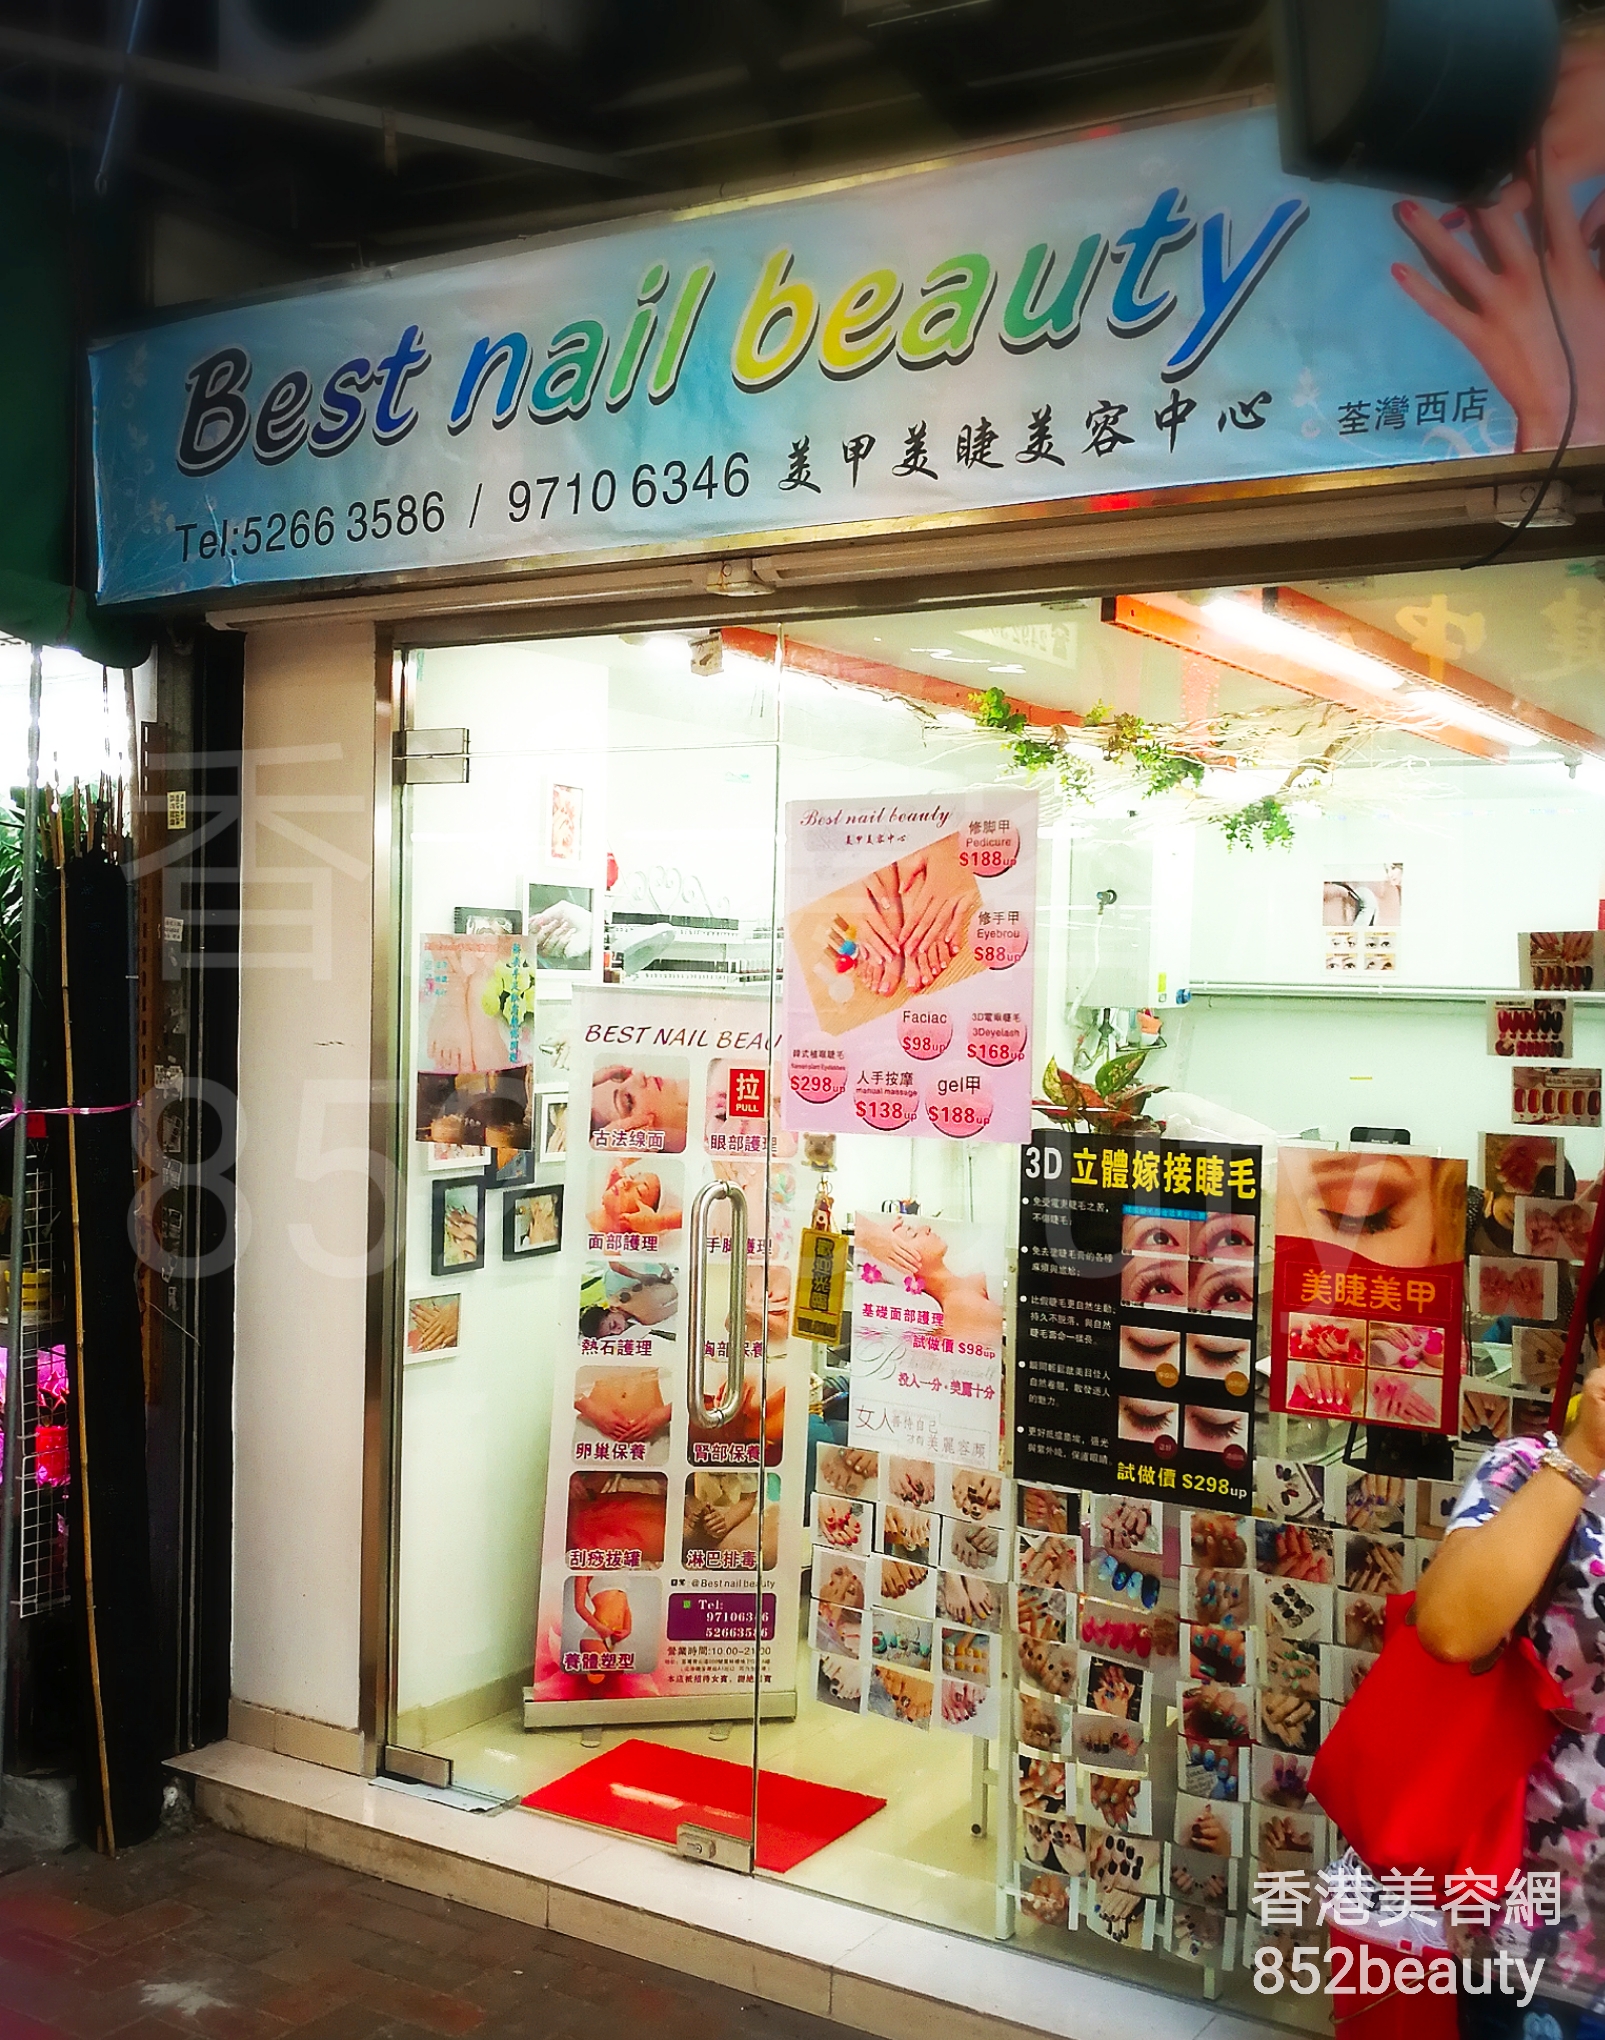 Hair Removal: Best nail beauty (荃灣西)